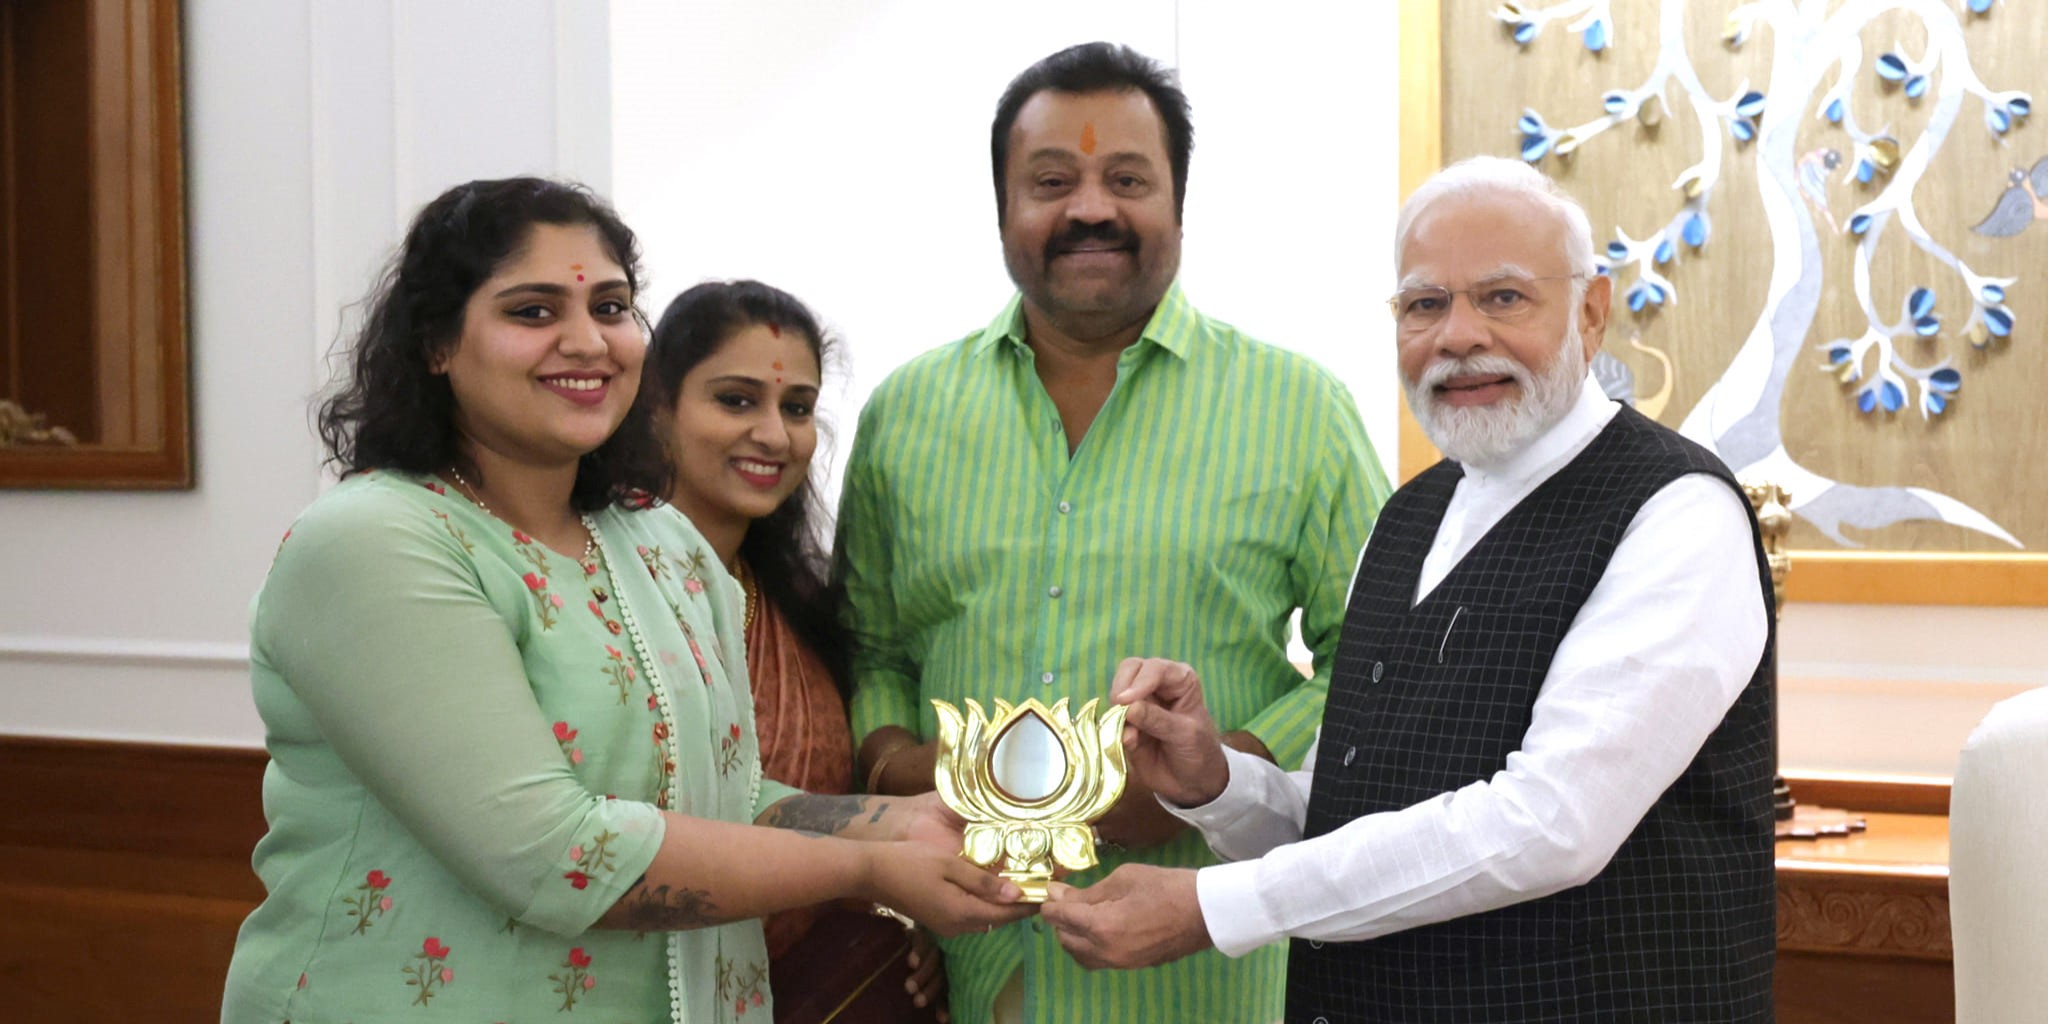 Bhagya presents a replica of BJP symbol to Modi in Delhi with Gopi and his wife Radhika Nair.